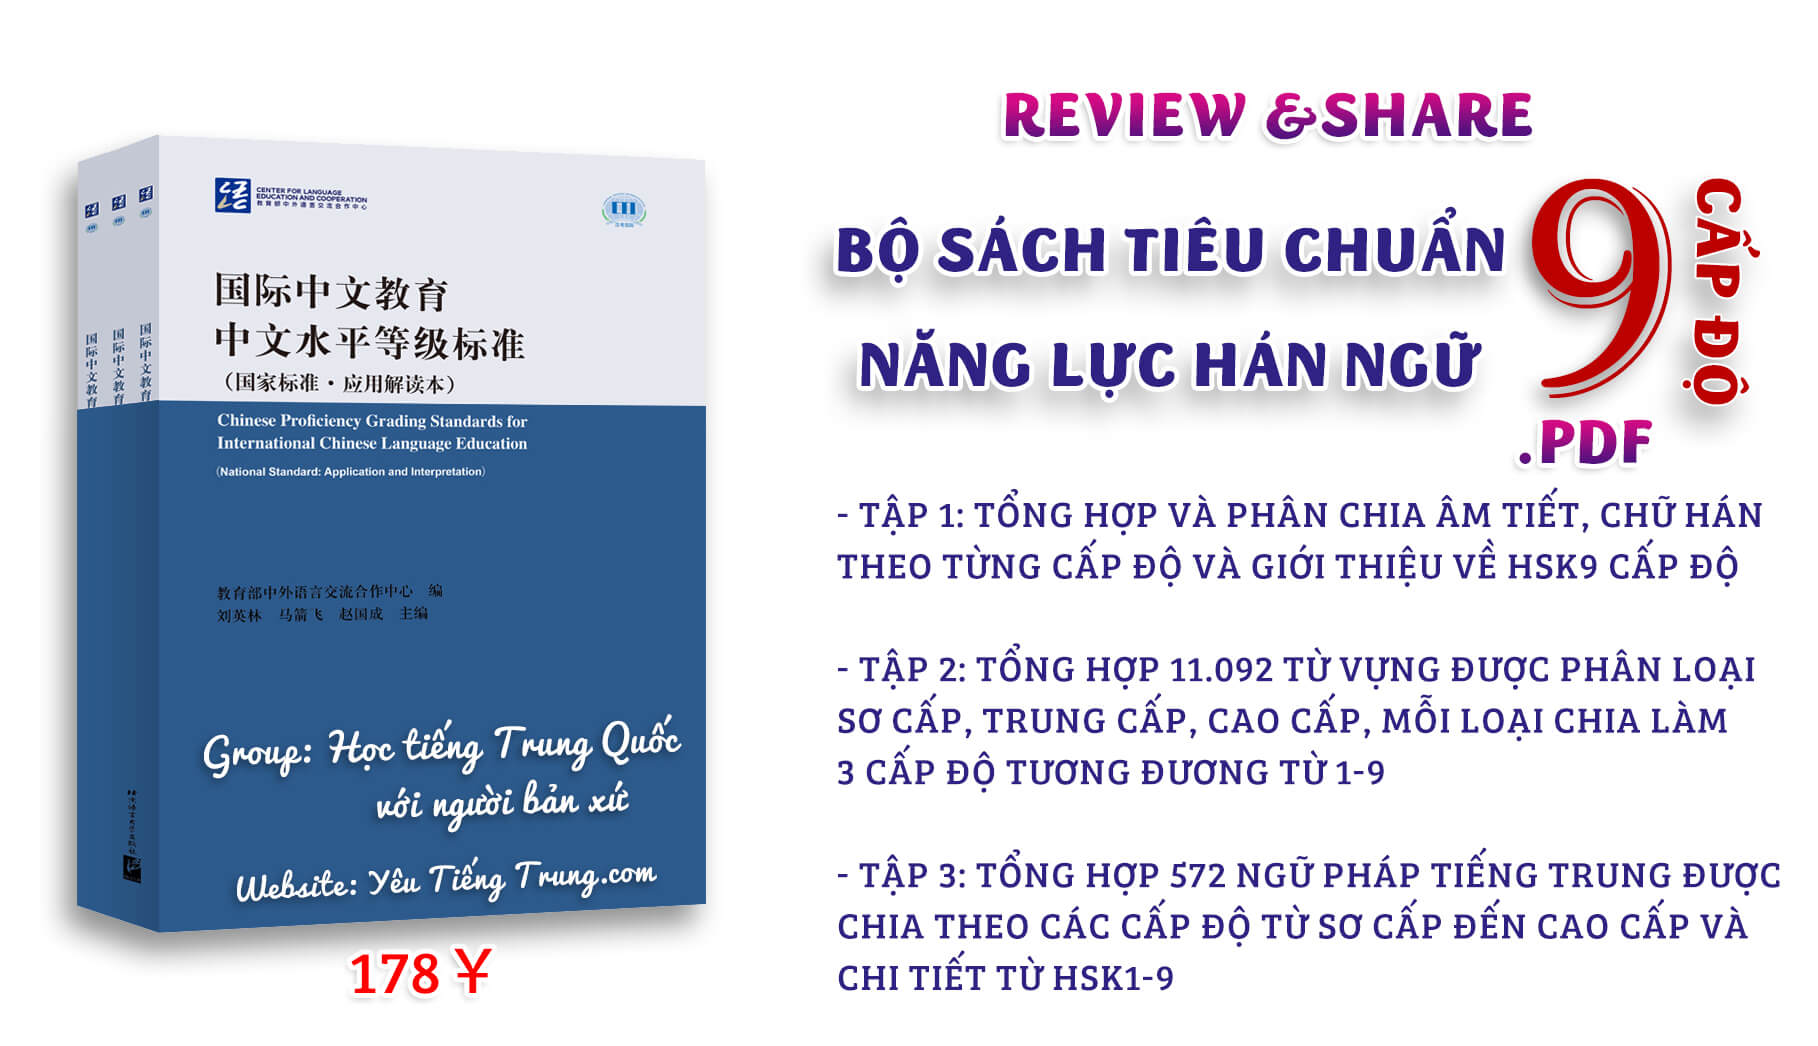 Review-Bo-sach-tieu-chuan-cap-do-trinh-do-tieng-trung-9-cap-do